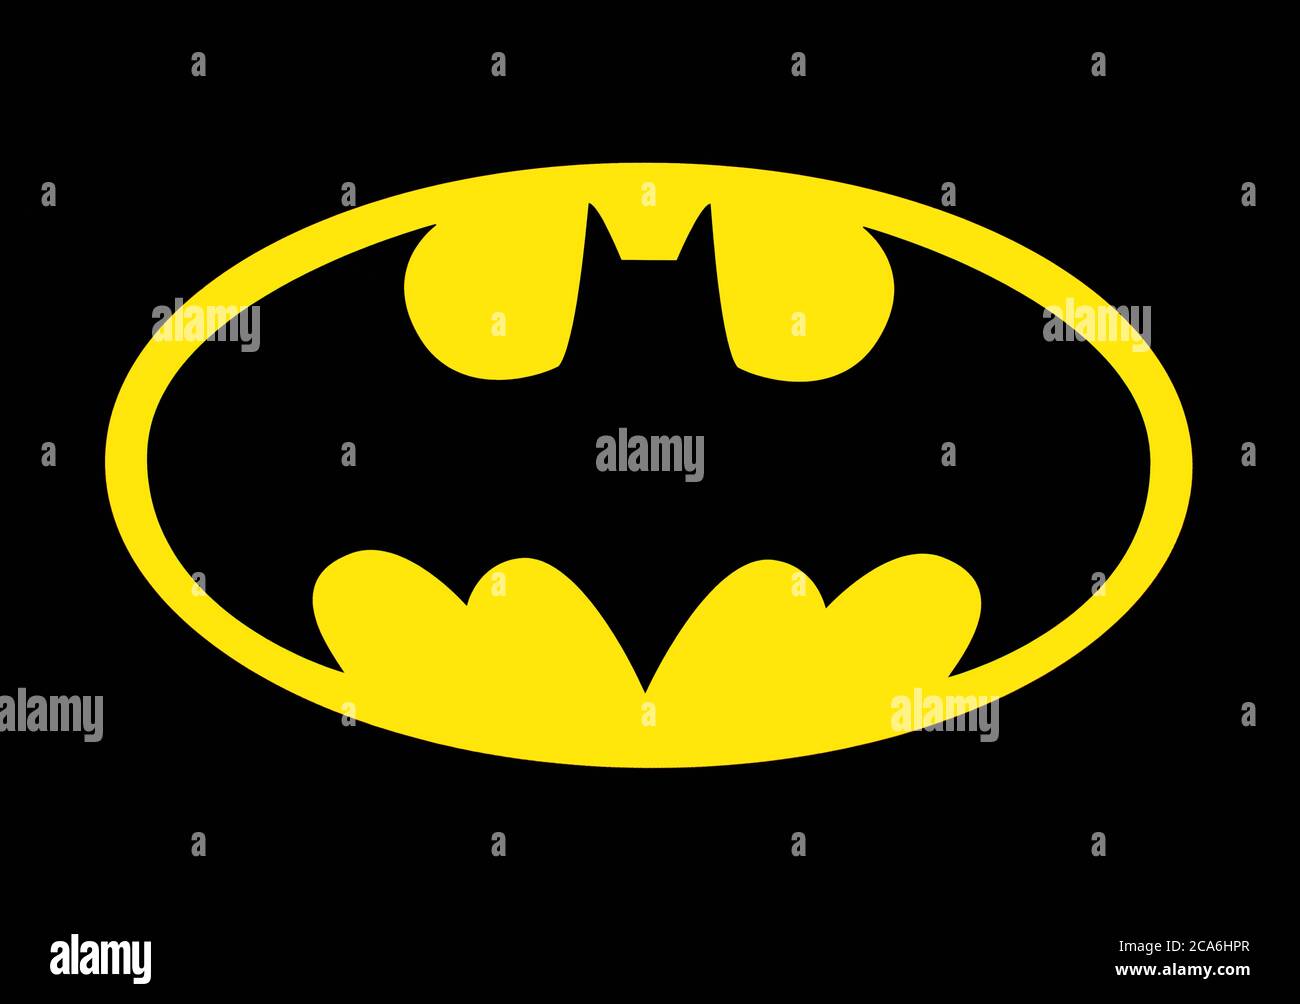 Batman logo hi-res stock photography and images - Alamy